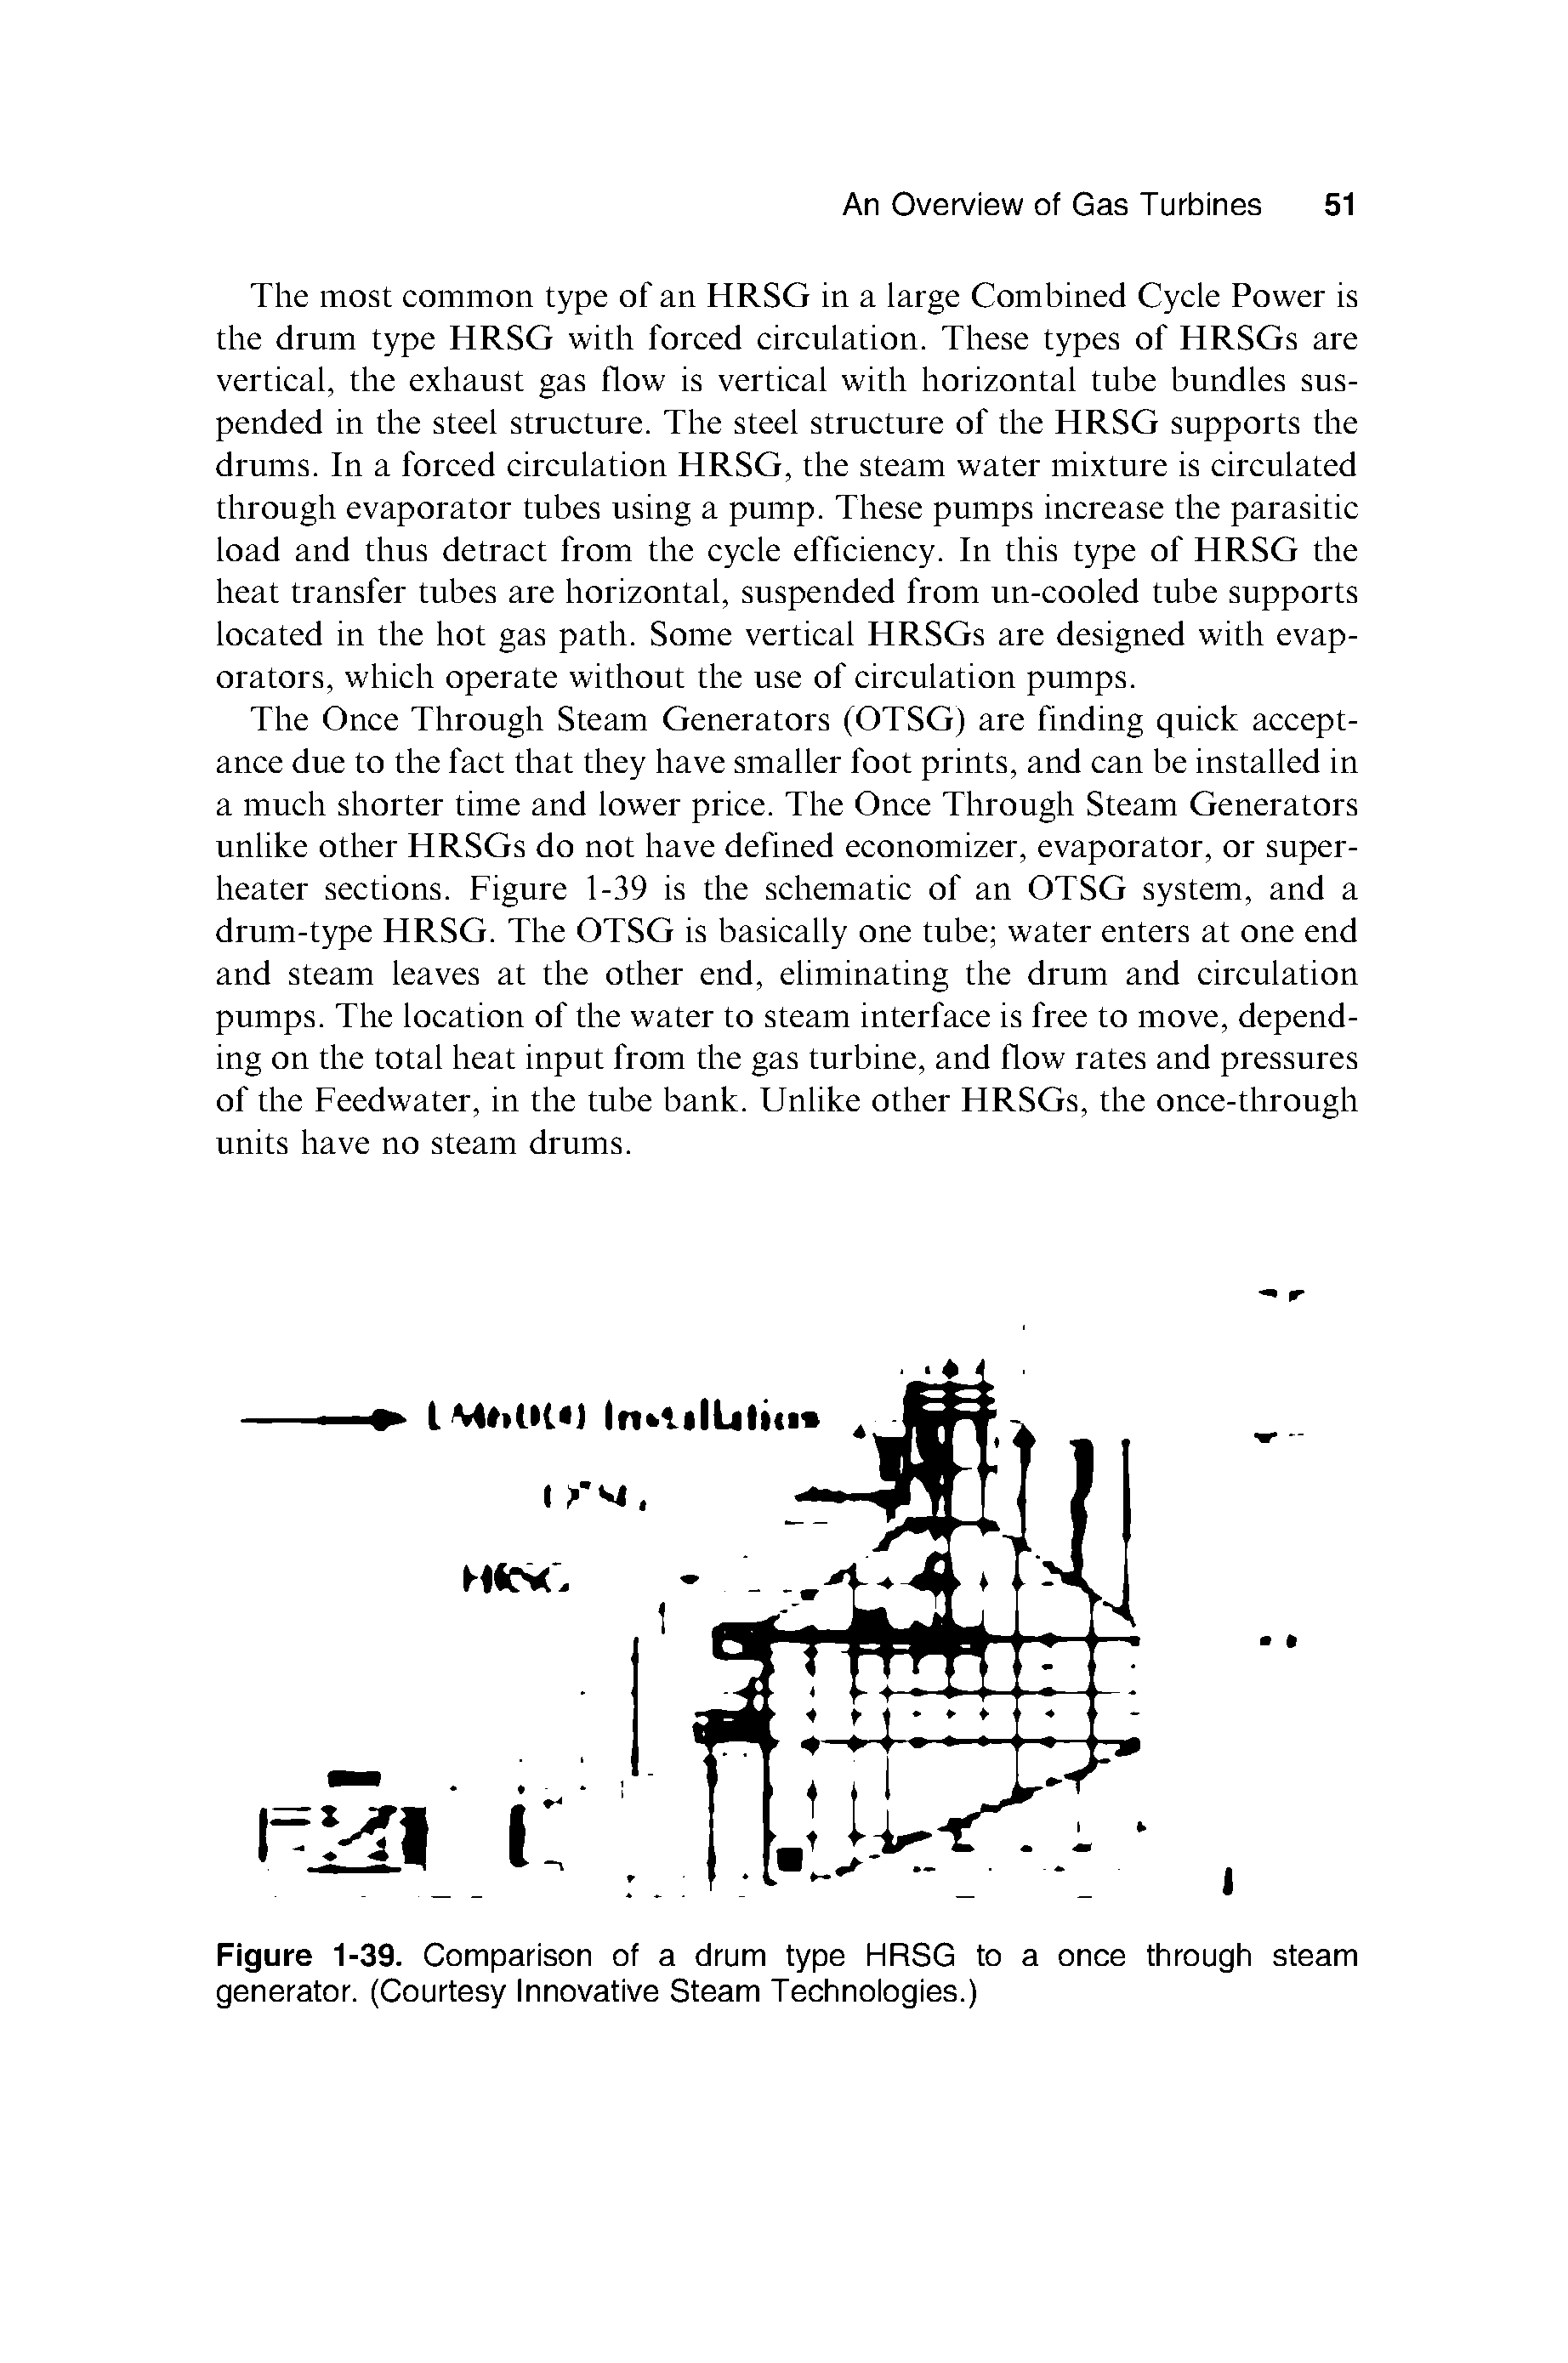 Figure 1-39. Comparison of a drum type HRSG to a onoe through steam generator. (Courtesy Innovative Steam Teehnoiogies.)...